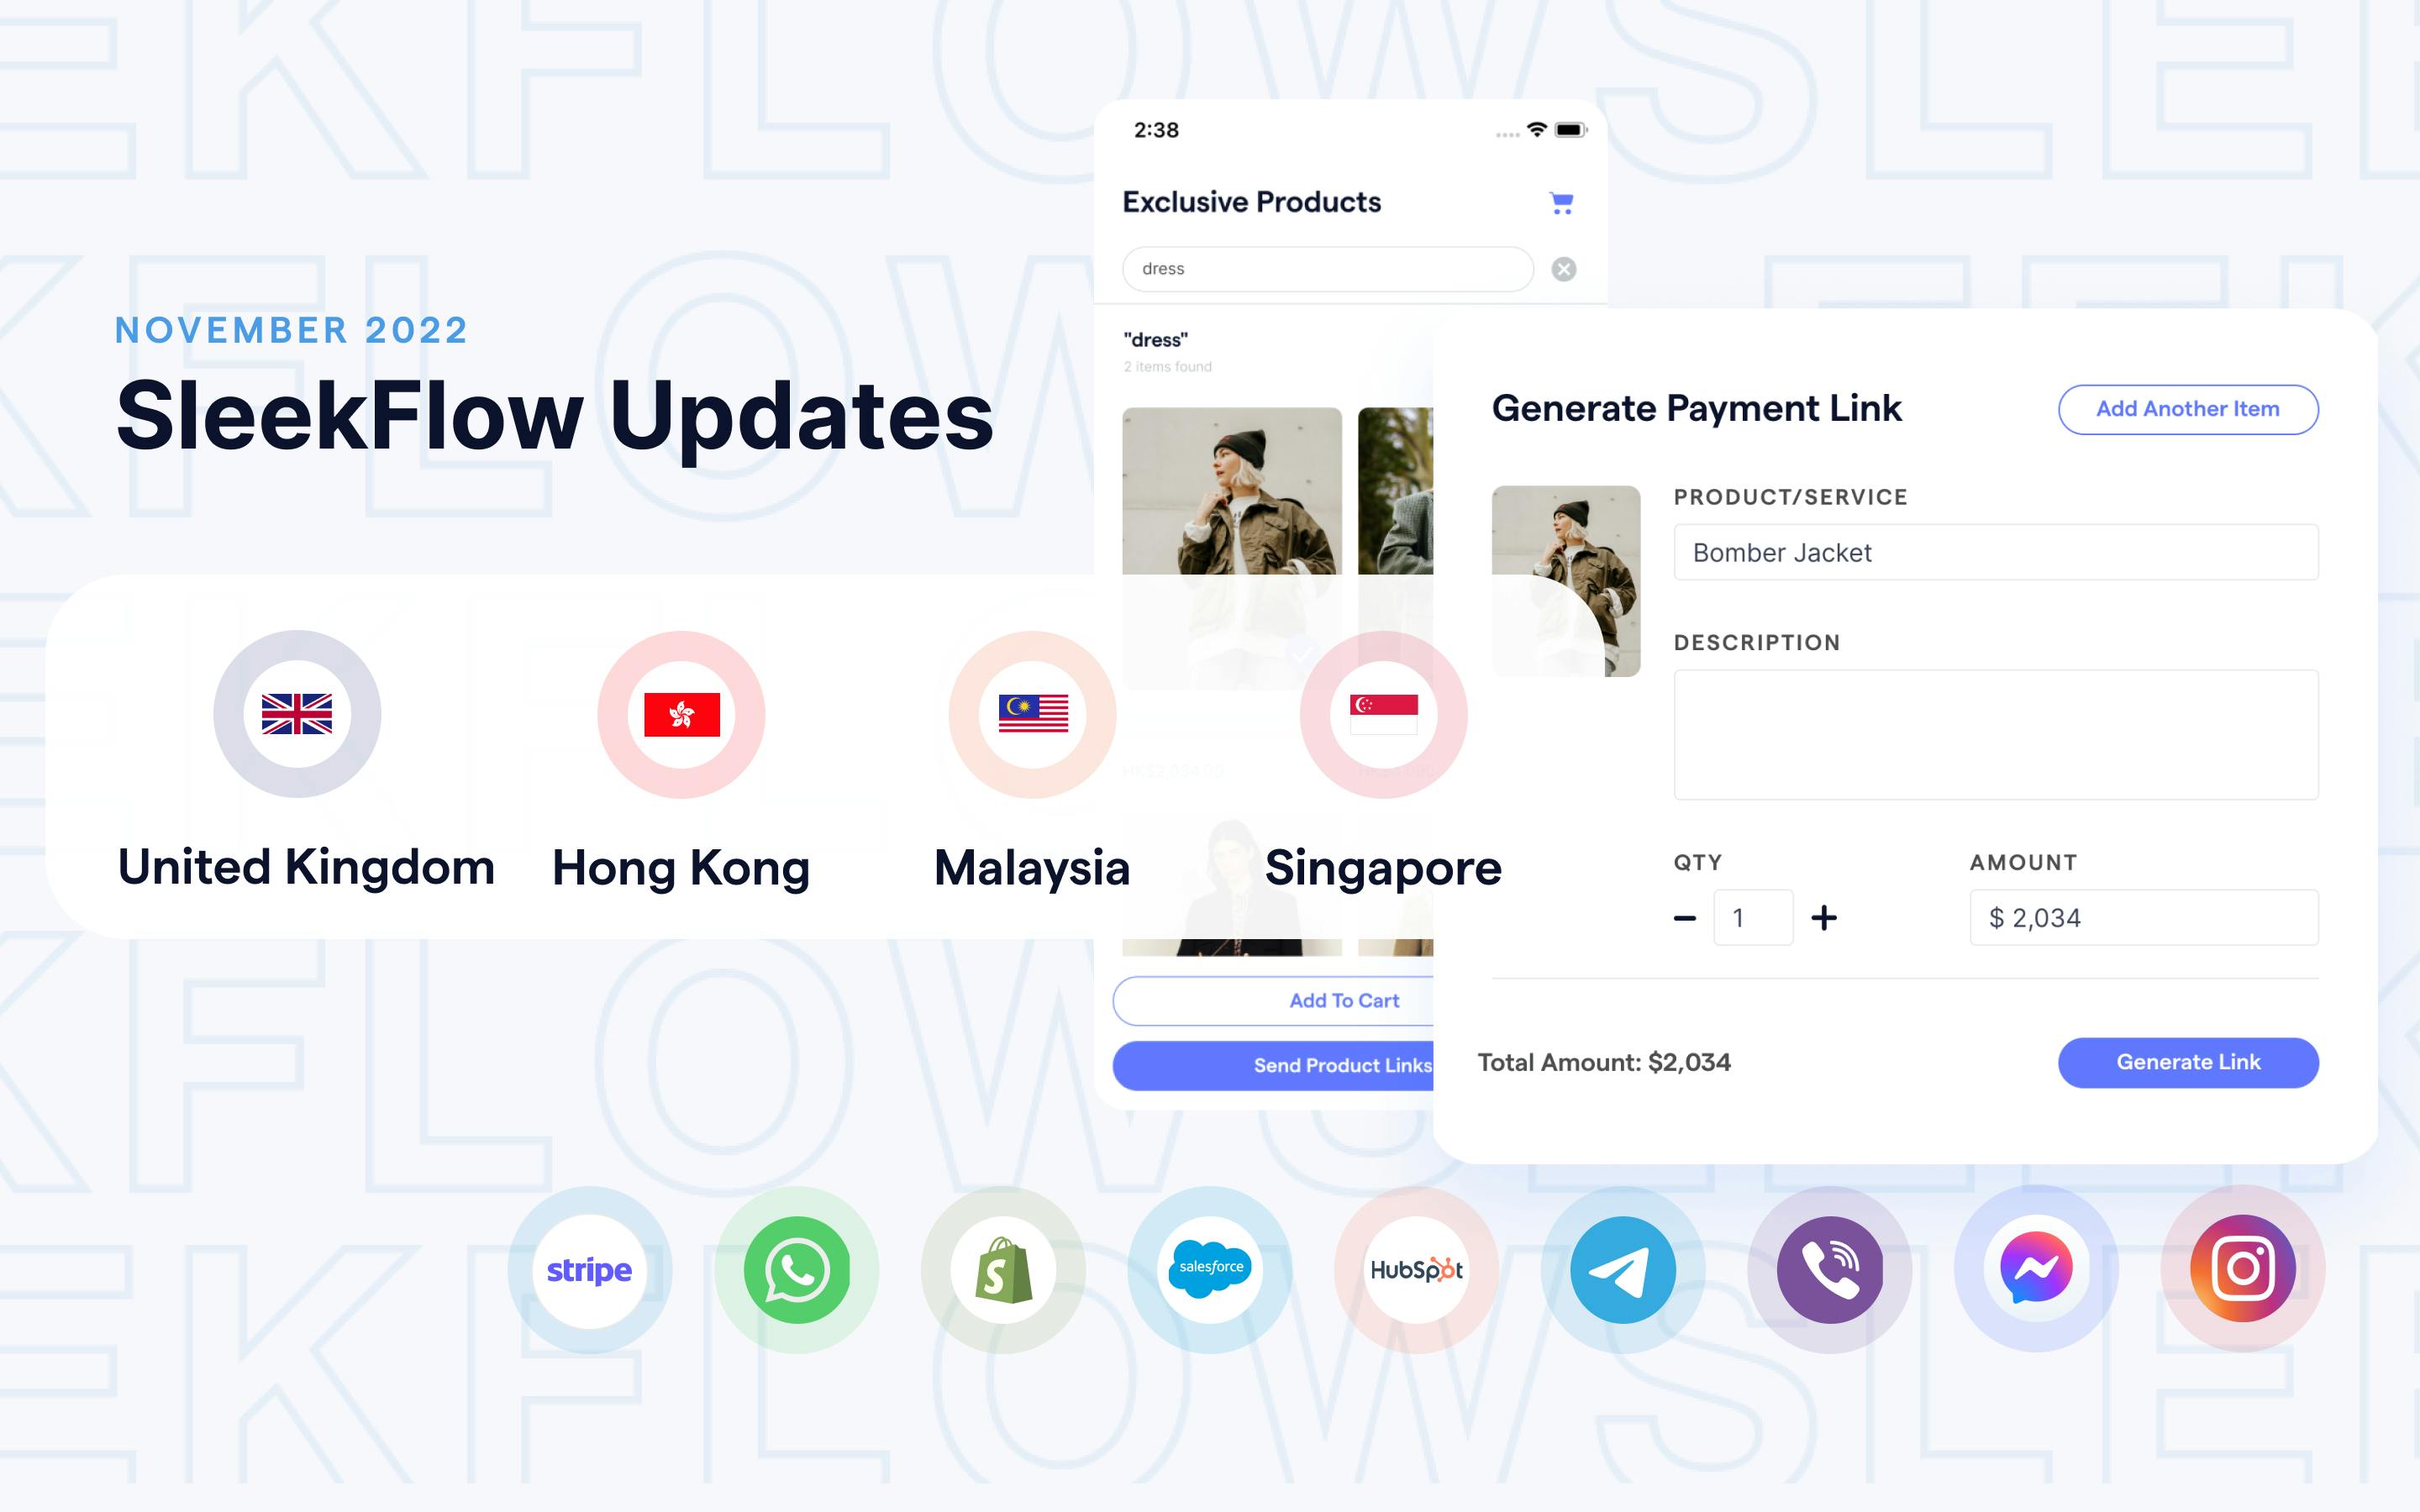 What’s new in SleekFlow: 新加坡、馬來西亞及英國商戶現可使用收款連結功能